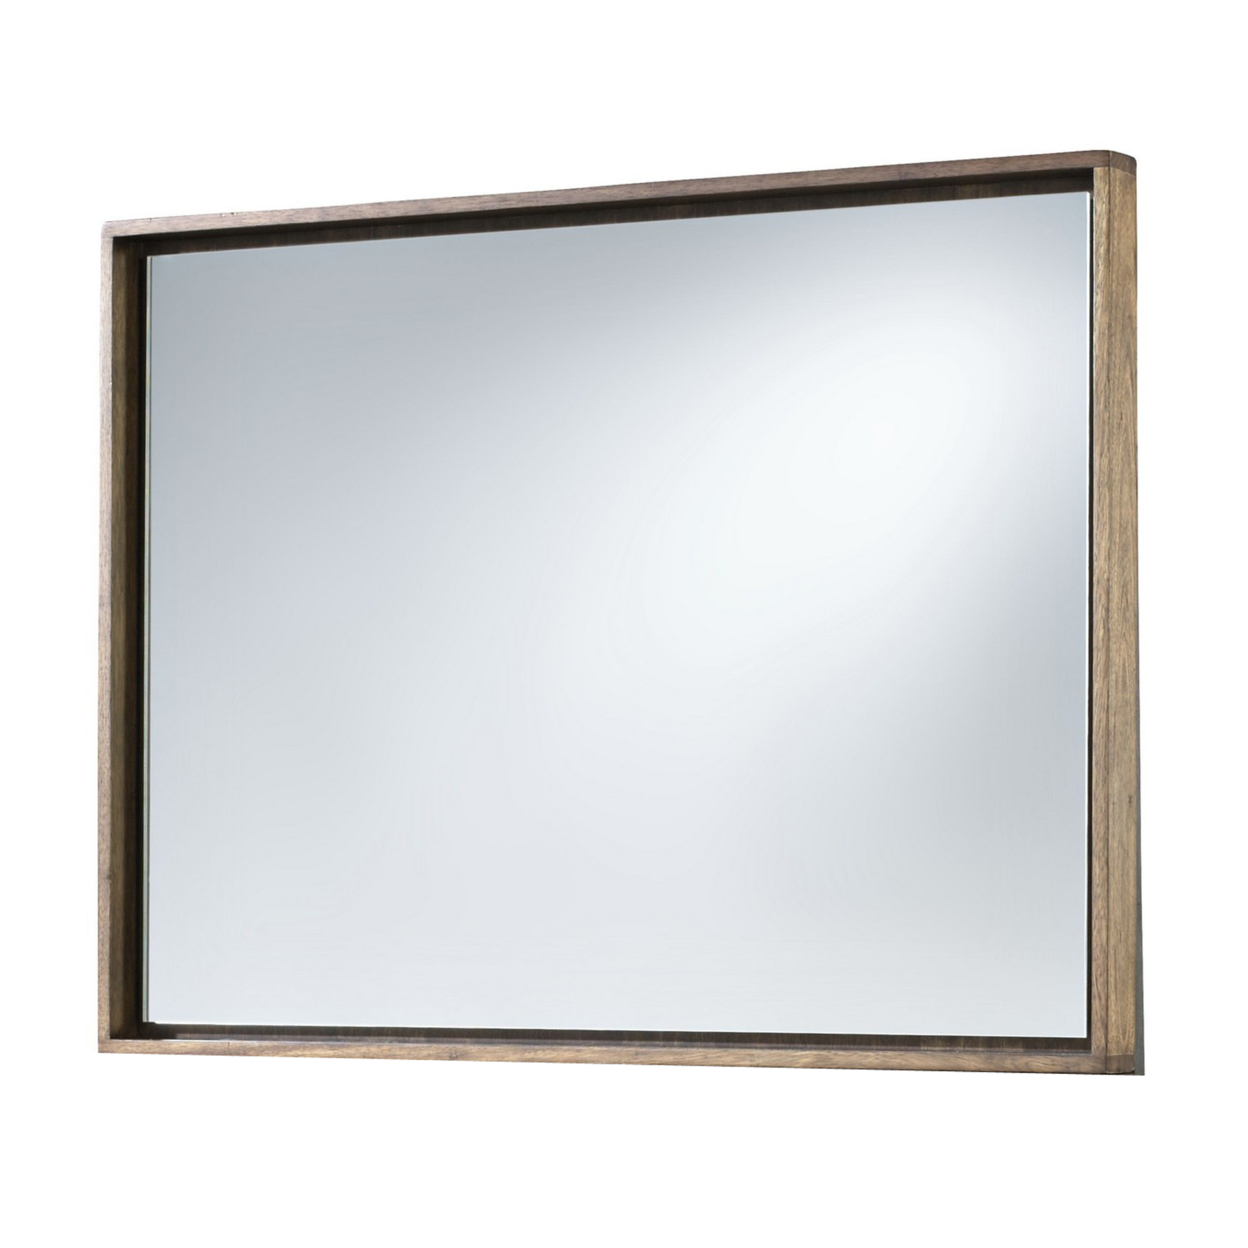 Rectangular Wooden Frame Incased Mirror With Raised Edges, Natural Brown- Saltoro Sherpi